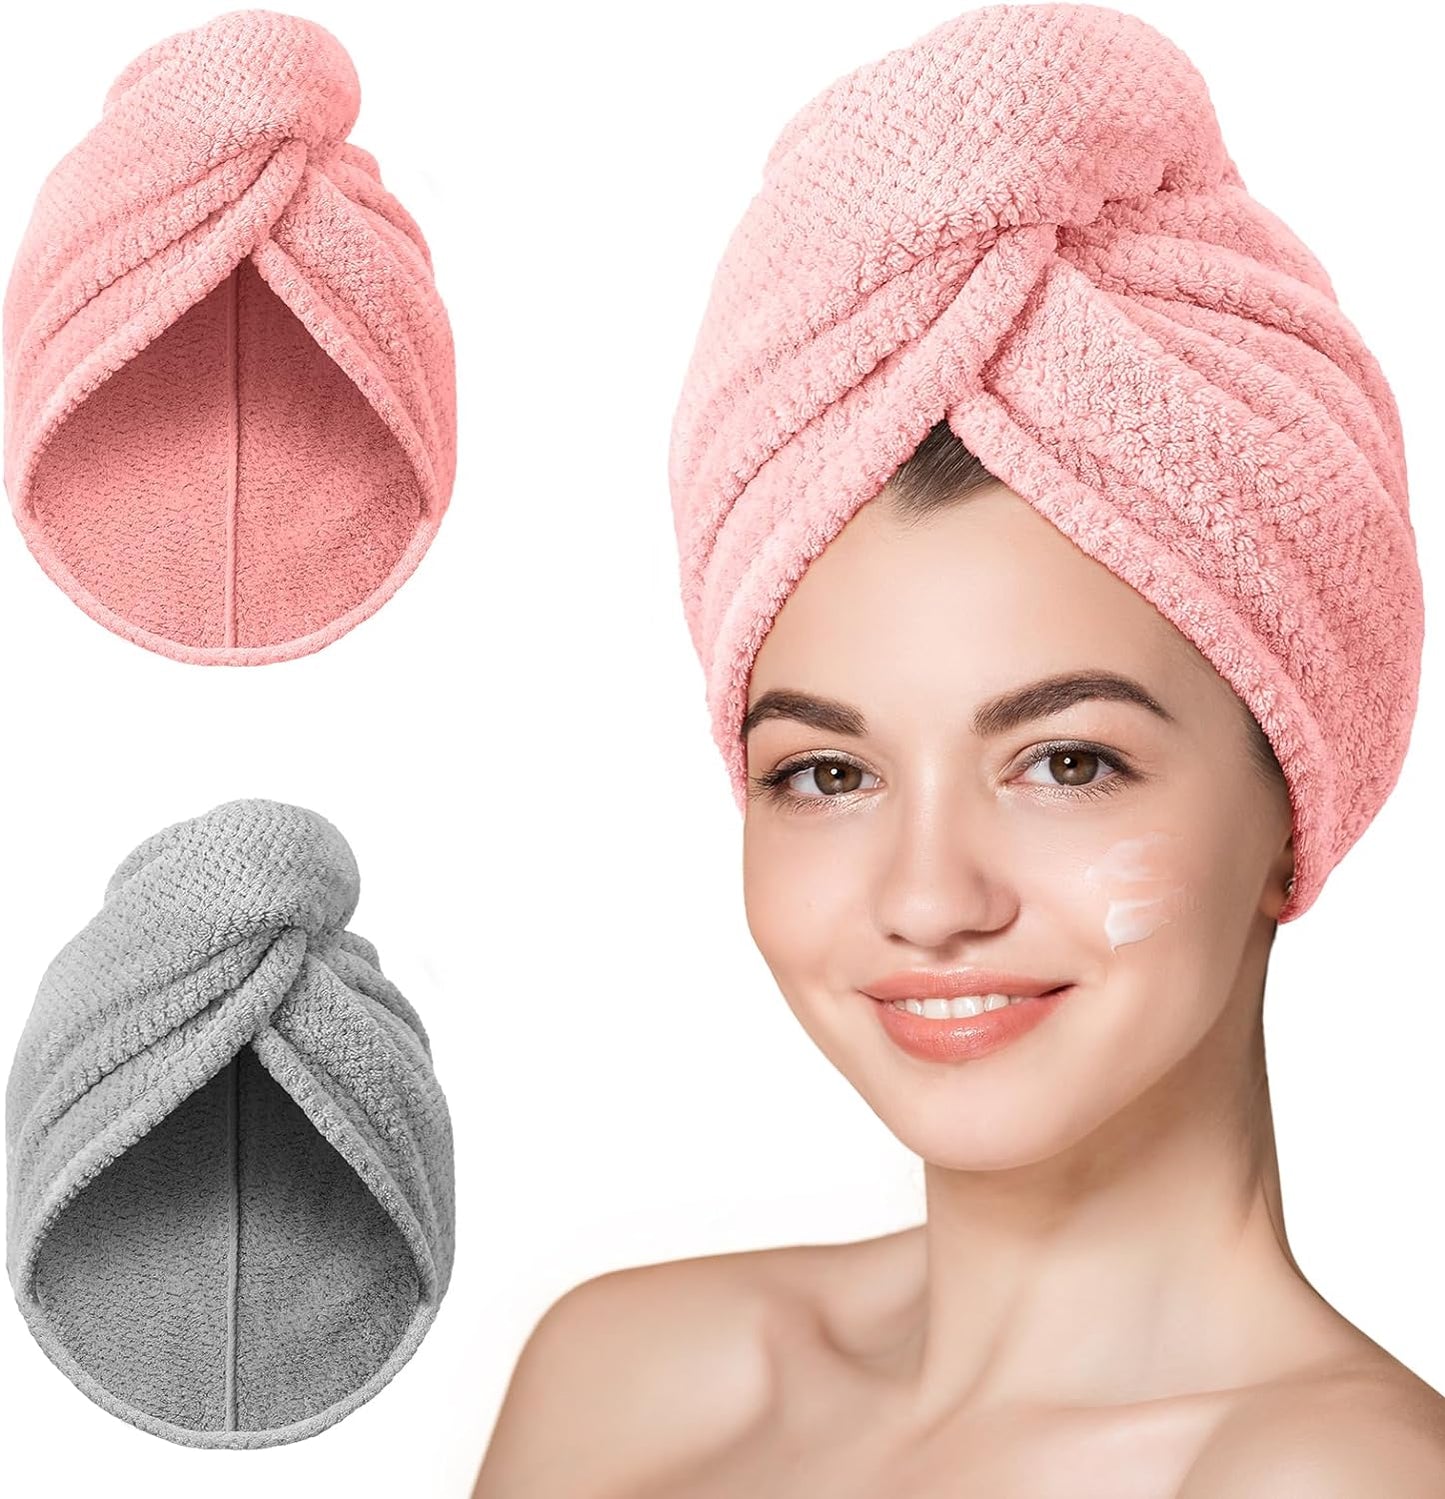 Microfiber Hair Towel, 3 Packs Hair Turbans for Wet Hair, Drying Hair Wrap Towels for Curly Hair Women anti Frizz (Blue,Grey,Pink)